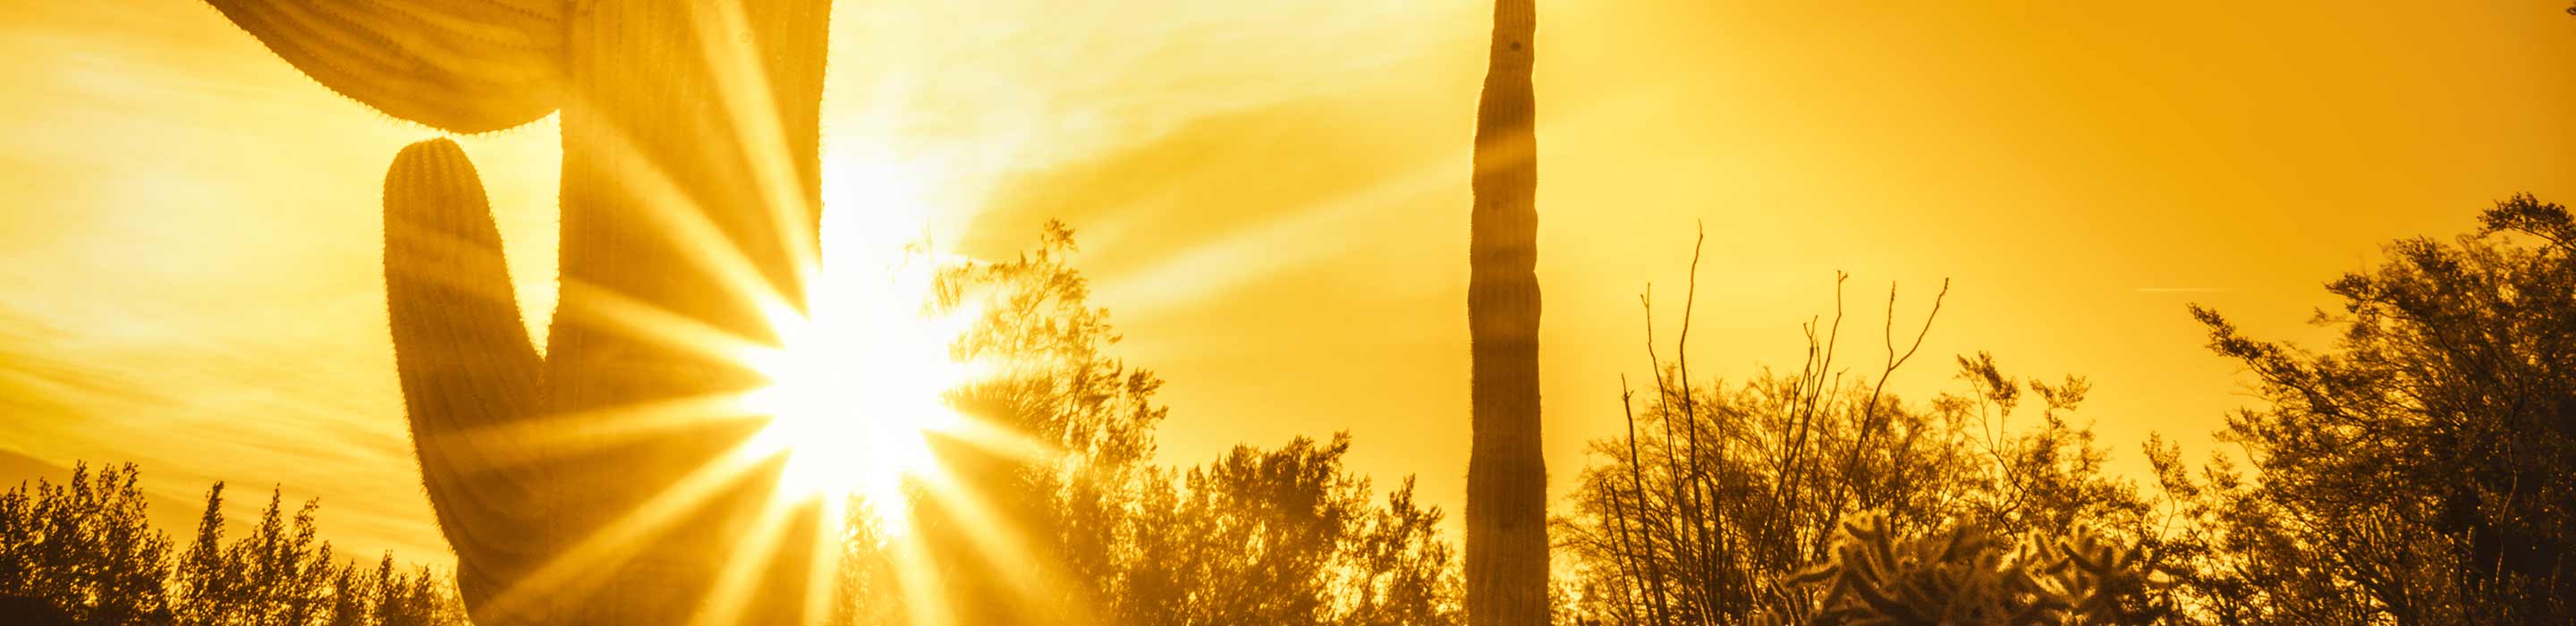 Sun and saguaro